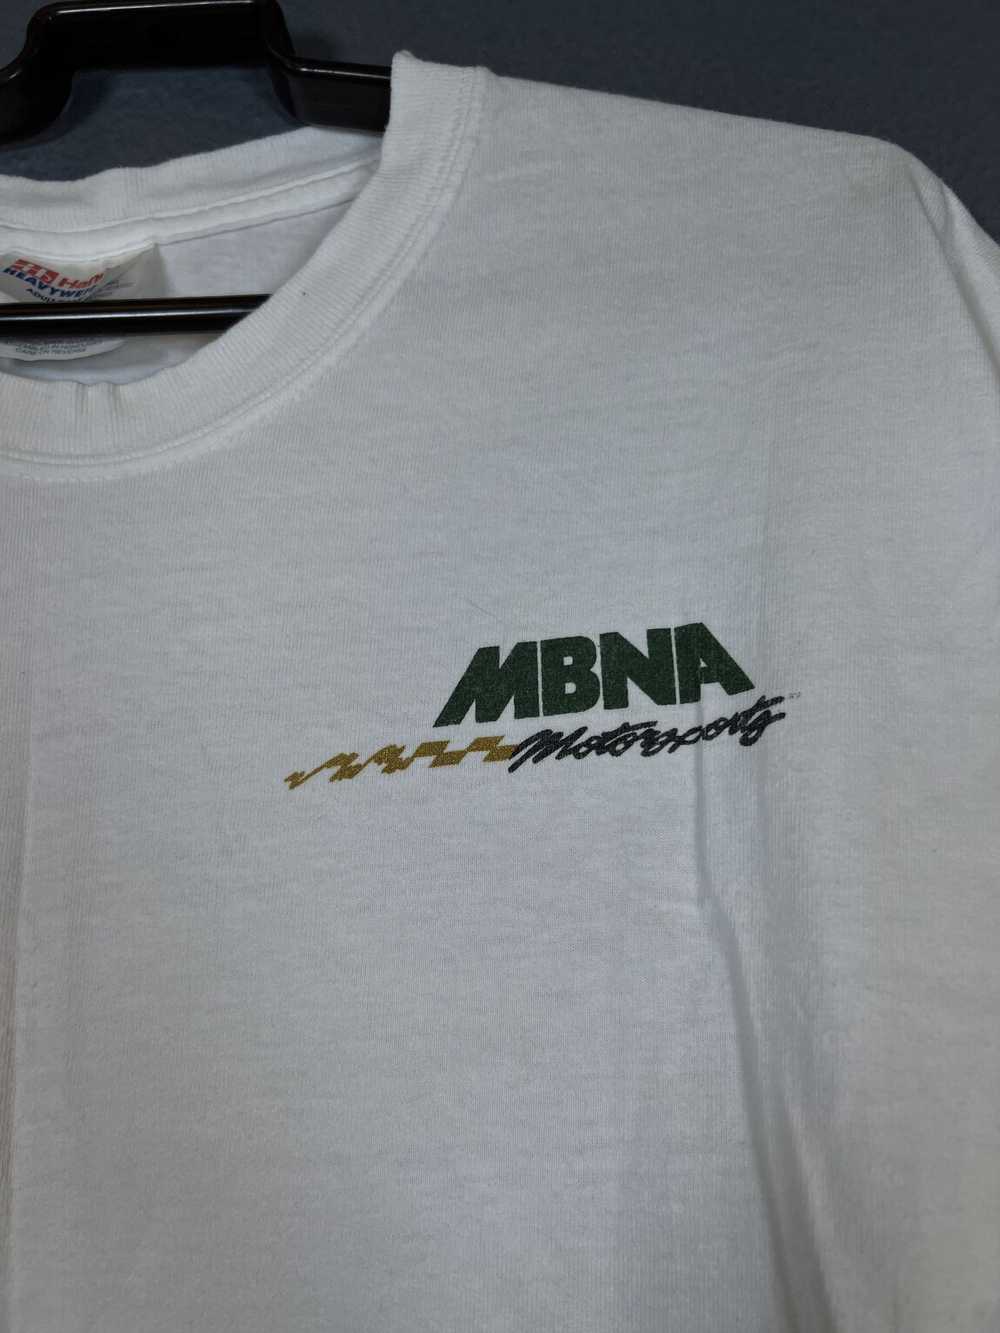 Vintage Mbna Motorsports T-Shirt XL NHRA Reaction… - image 5